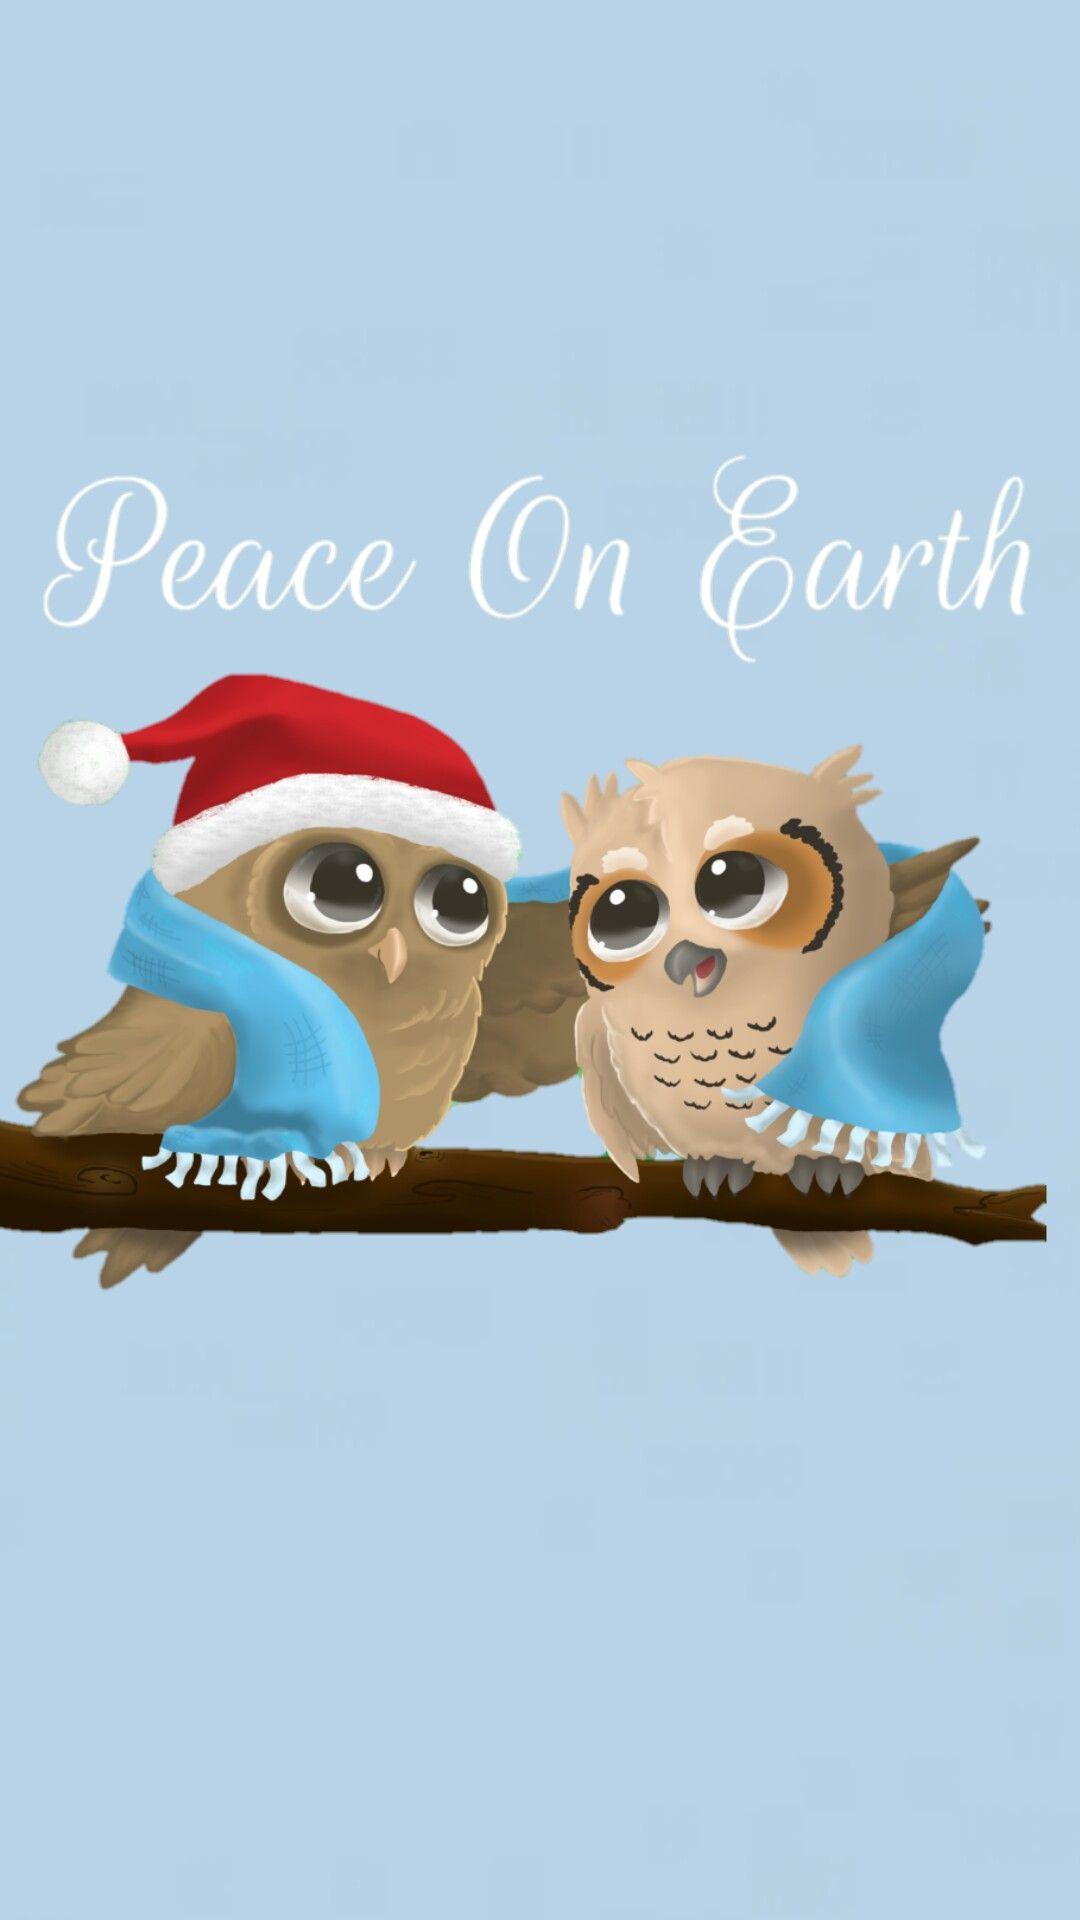 iPhone Wall: Peace on Earth tjn. Owl wallpaper iphone, Owl